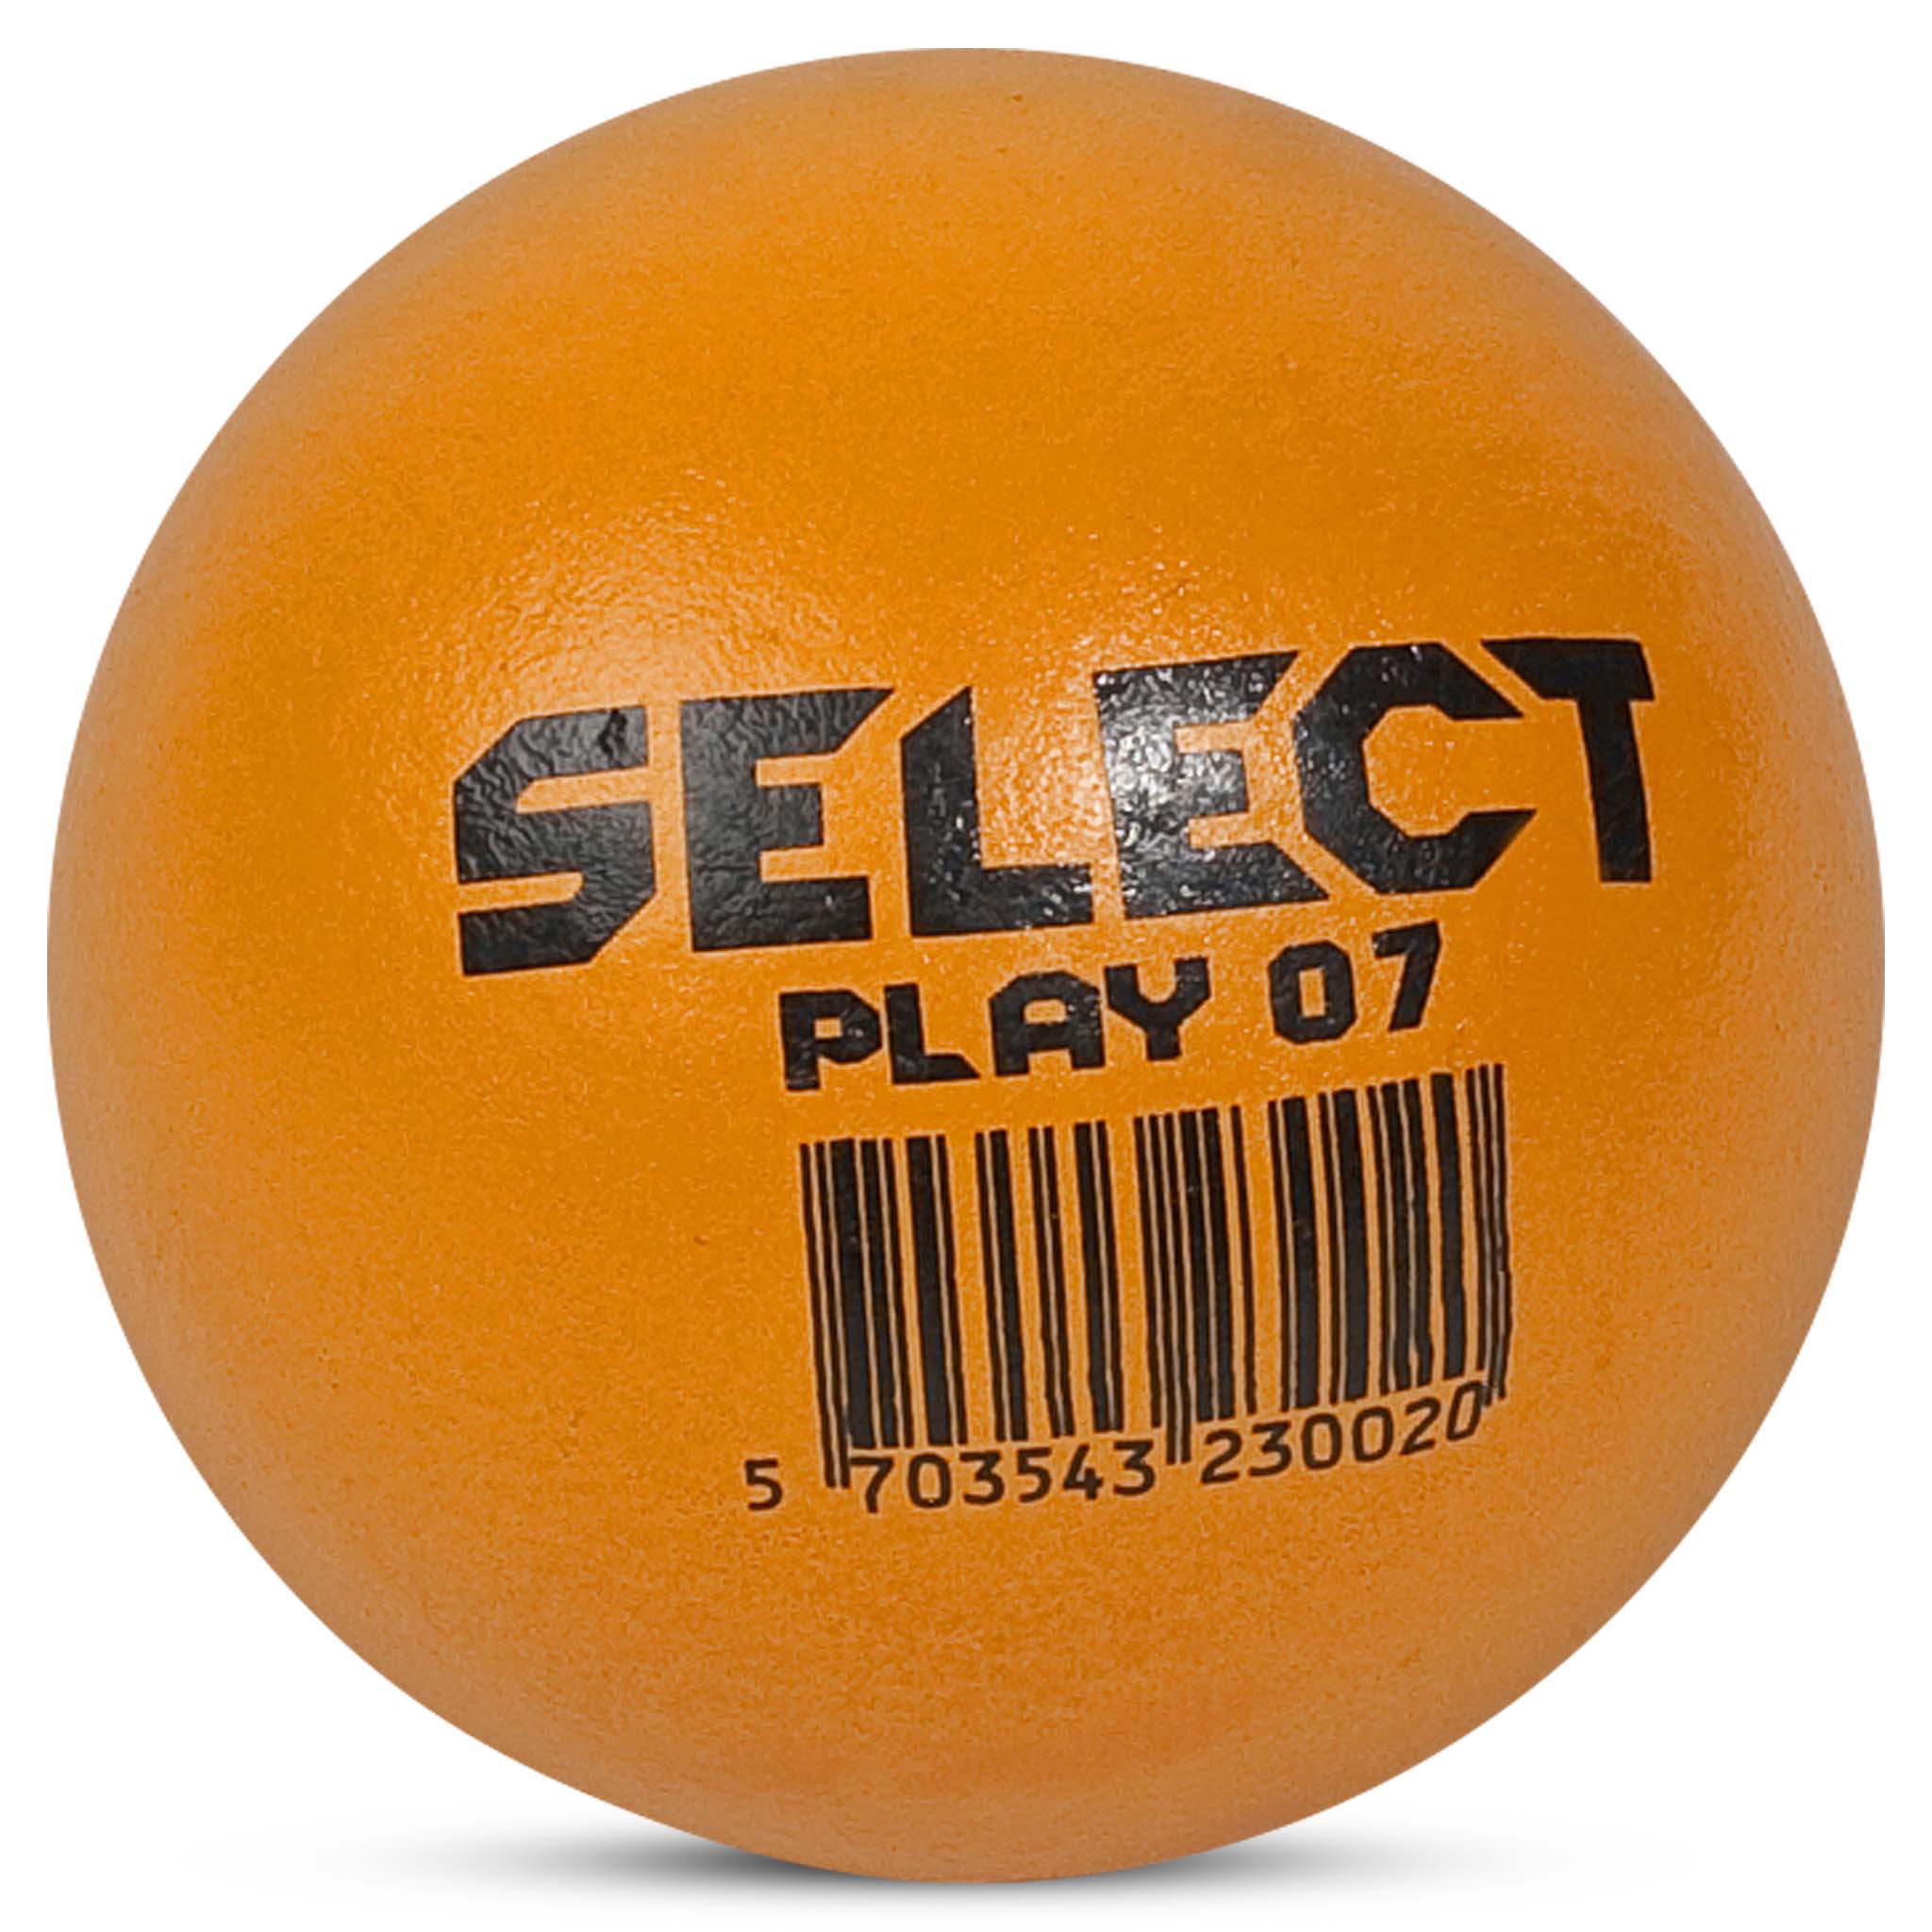 Foam ball - with skin Play 21 #colour_orange